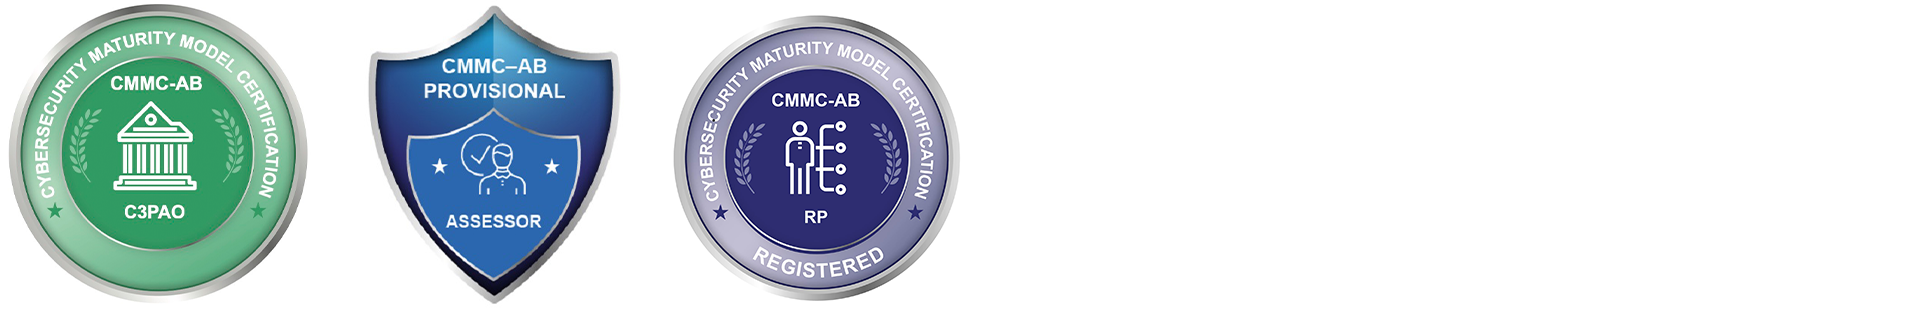 CMMC professional certification badges